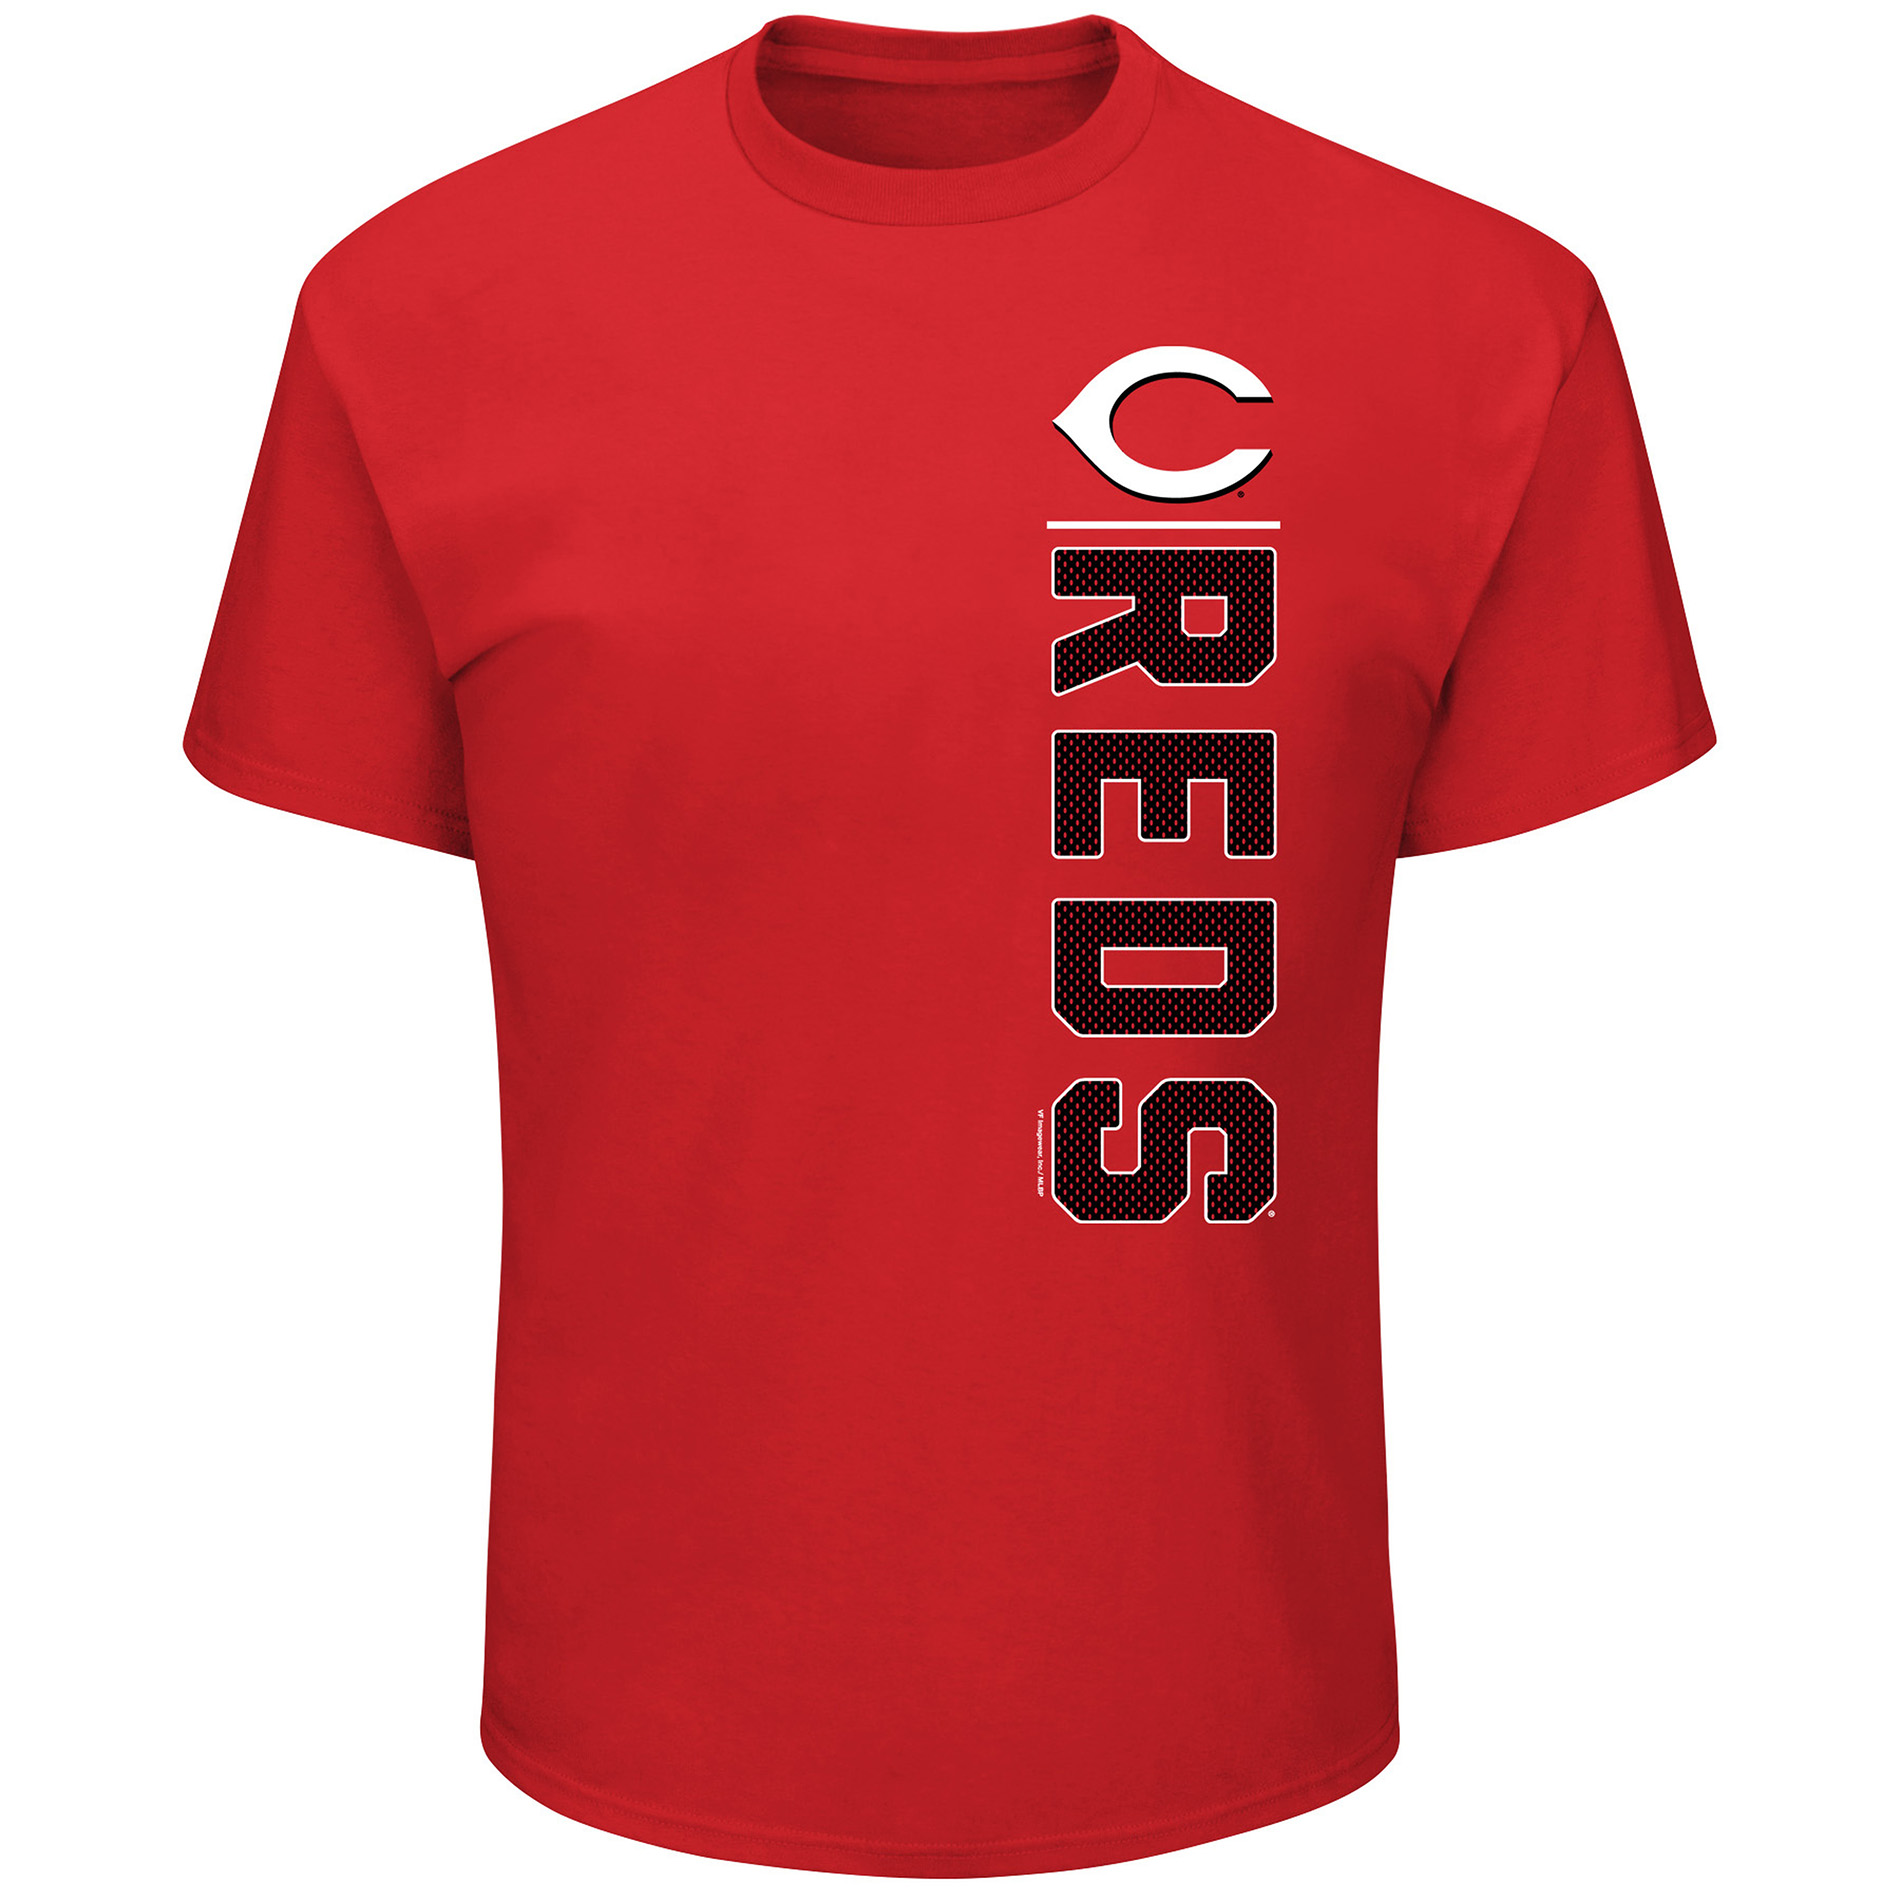 MLB Men’s Cincinnati Reds Graphic T-Shirt